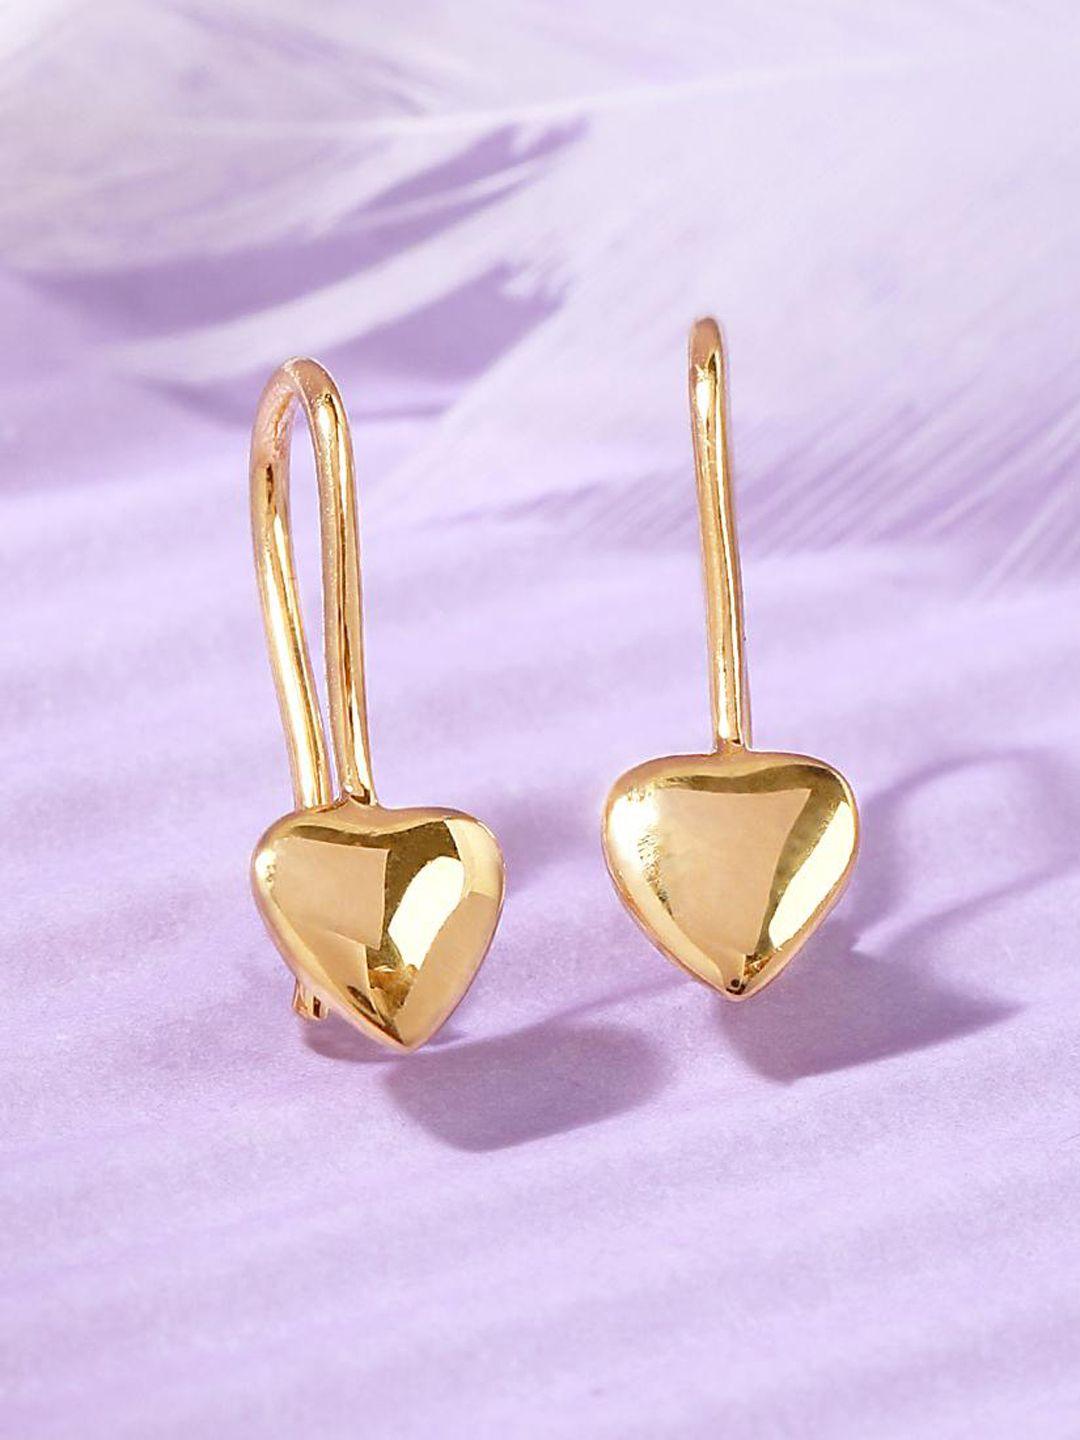 candere a kalyan jewellers company 18kt gold dangle earrings-1.4gm